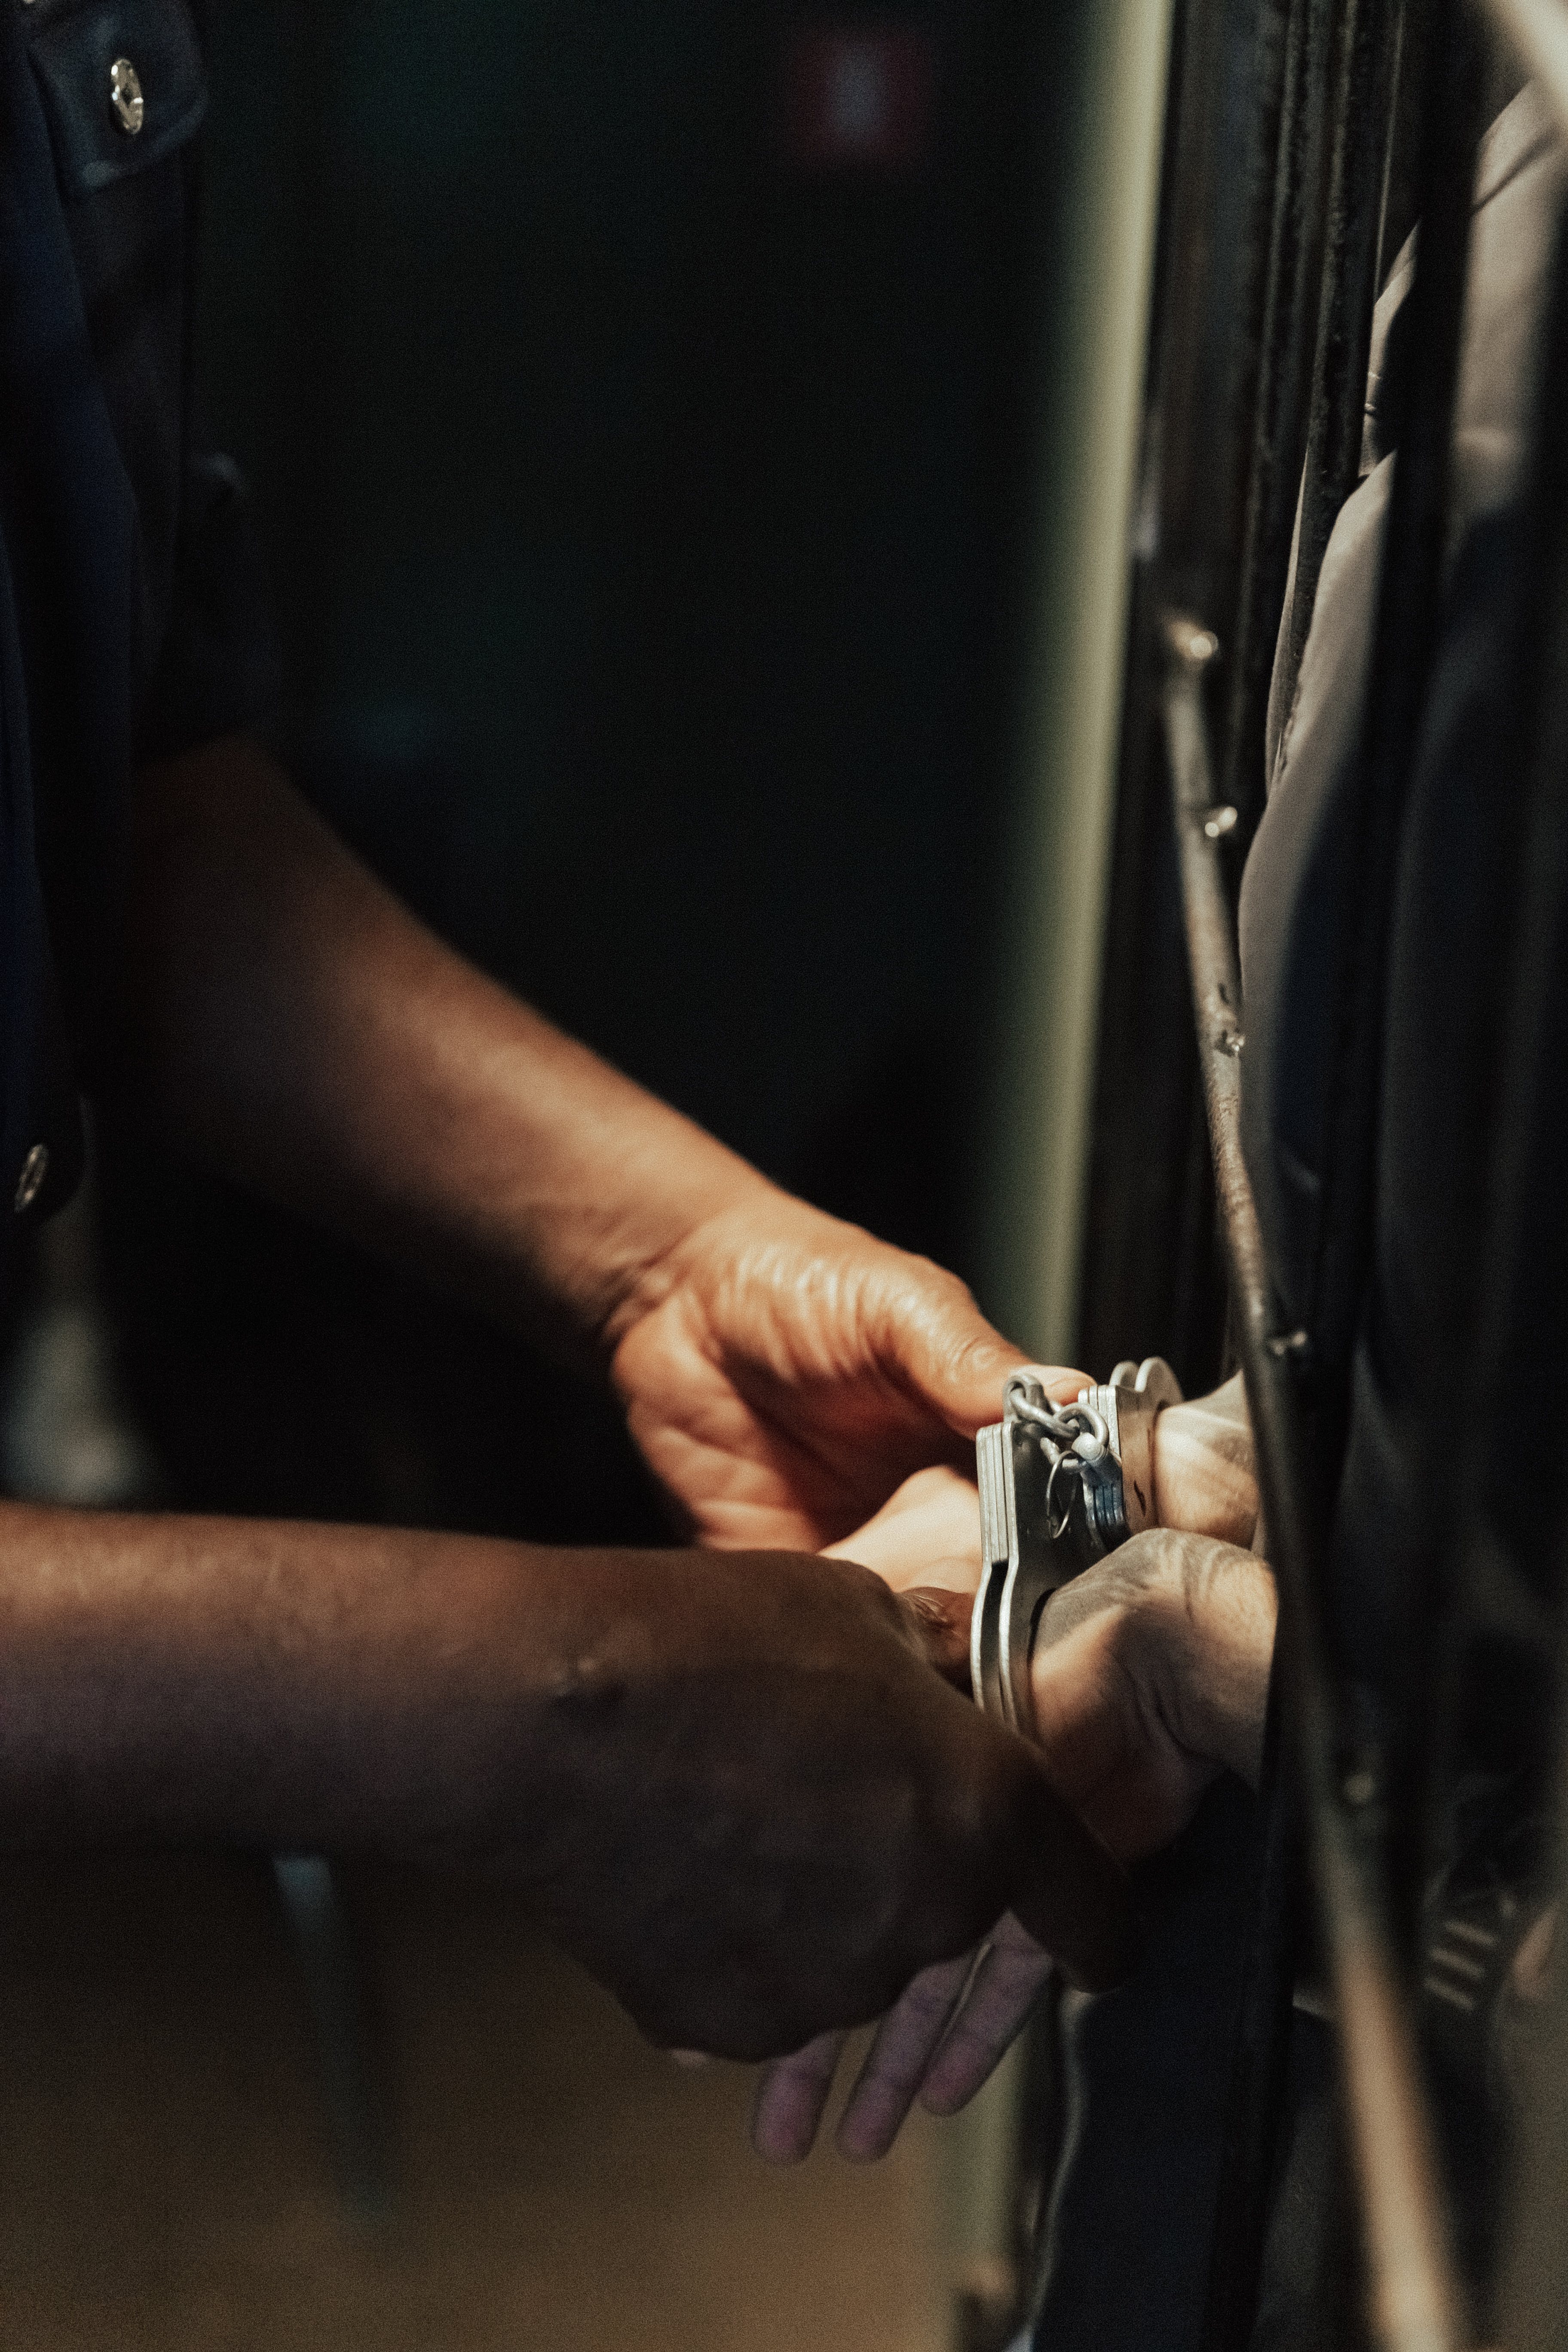 Handcuffs on hands of a prisoner. | Source: Pexels